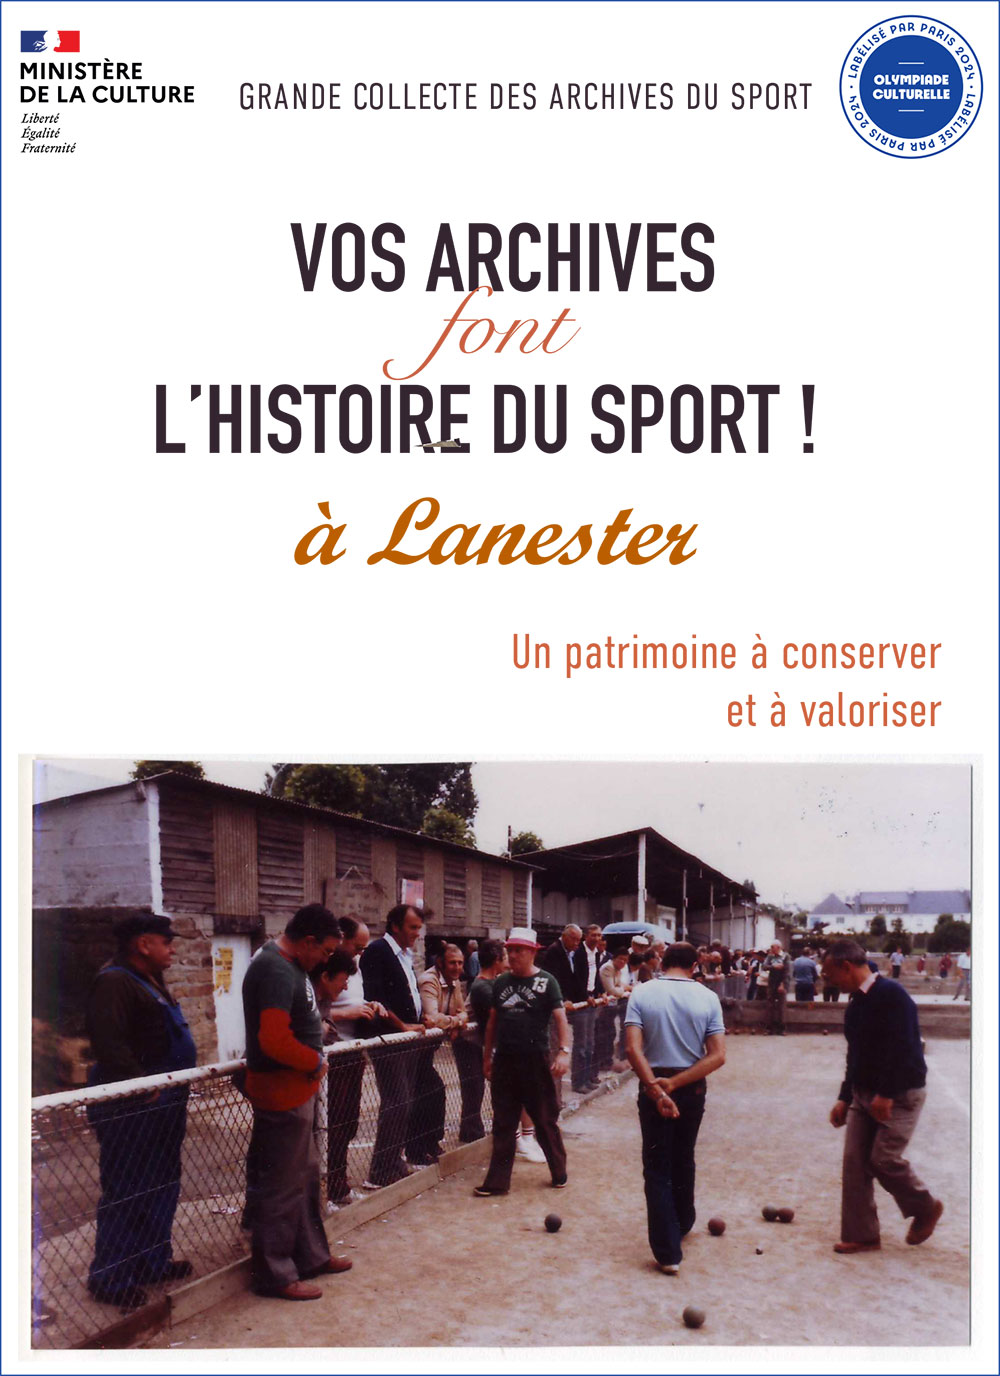 Visuel grande collecte archives du sport Lanester